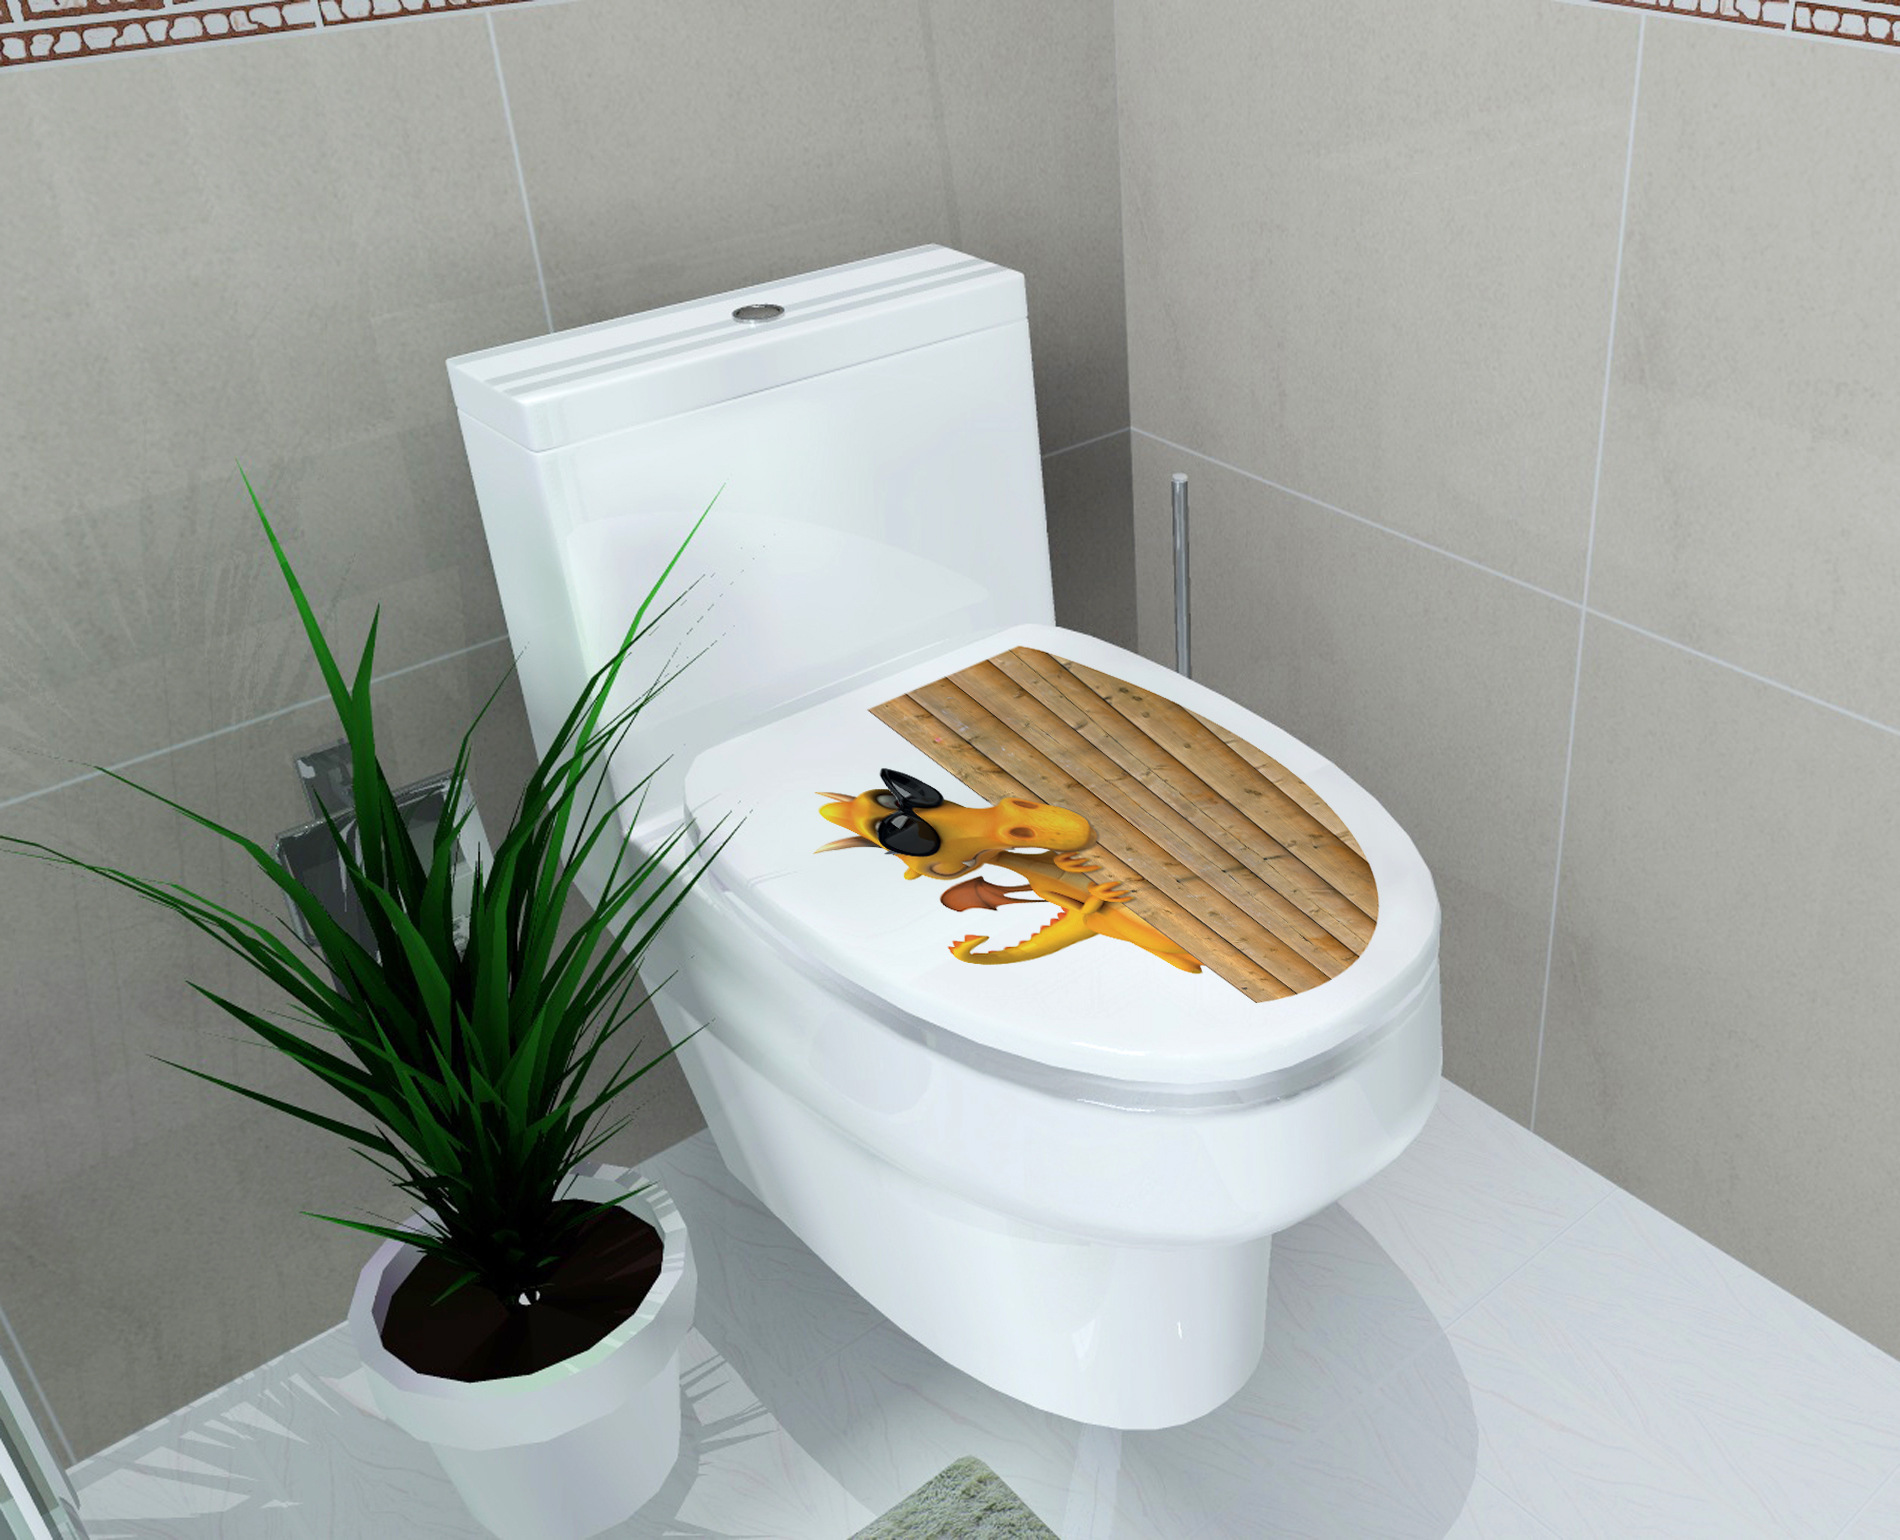 Creative-3D-Toilet-Seat-Wall-Sticker-Art-Wallpaper-Removable-Bathroom-Decals-Home-Decor-1299895-1